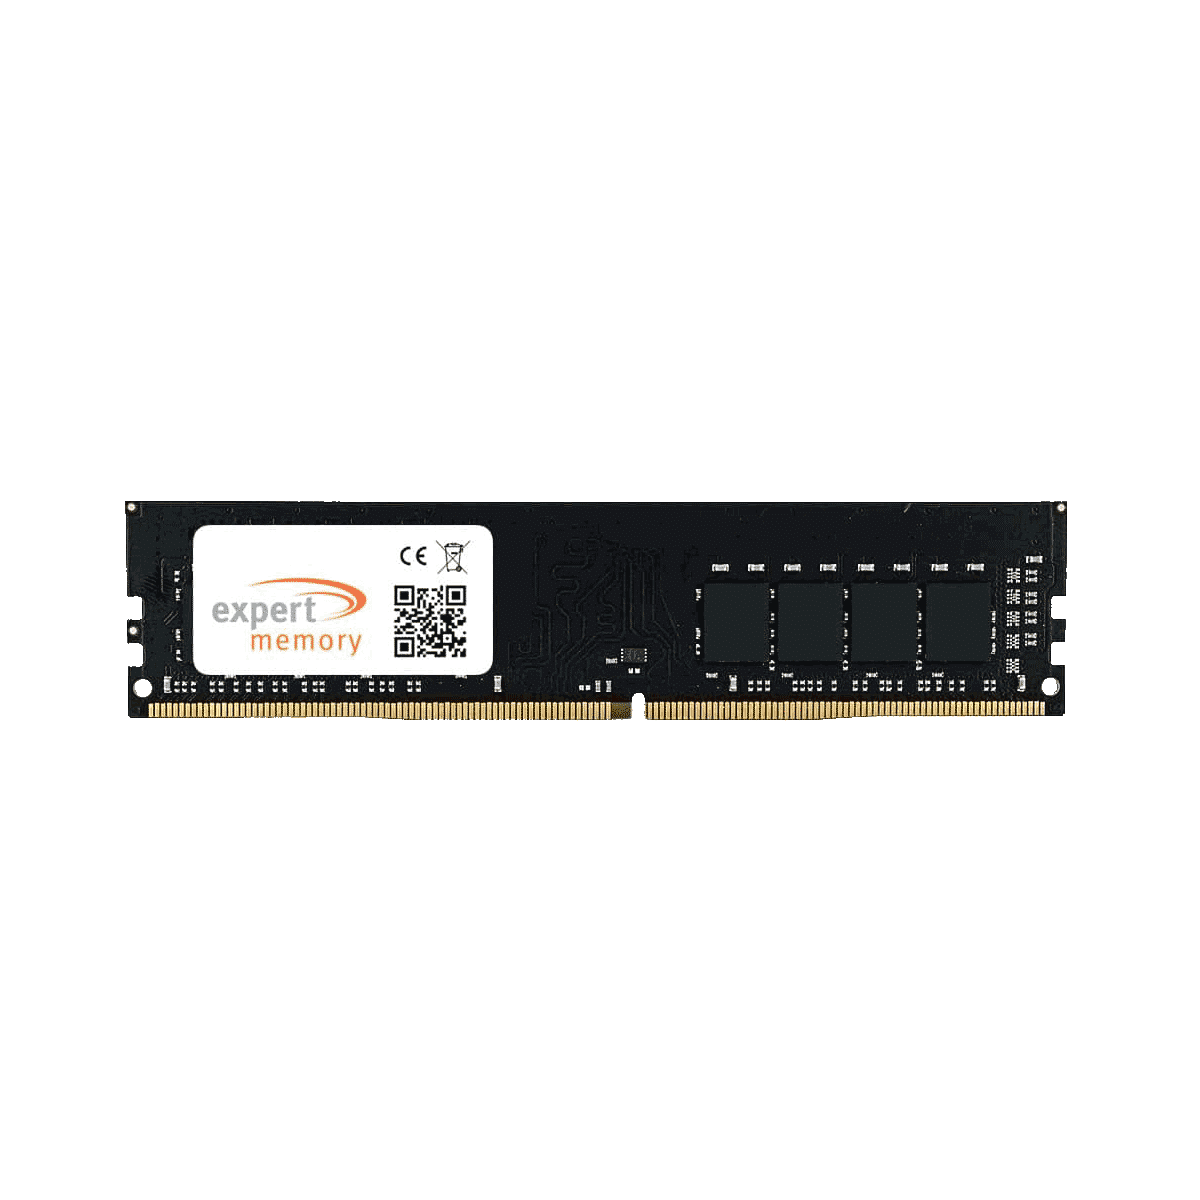 EXPERT MEMORY RAM Gigabyte Upgrade Z490M 2Rx8 32GB 3200 Memory DDR4 Workstation/Desktop GB UDIMM Mainboard 32